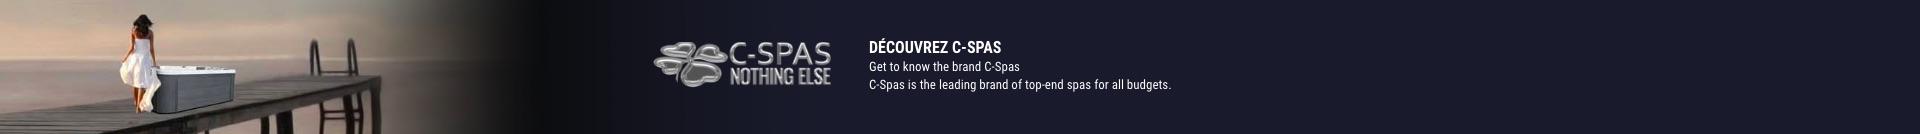 Get to know the brand C-Spas